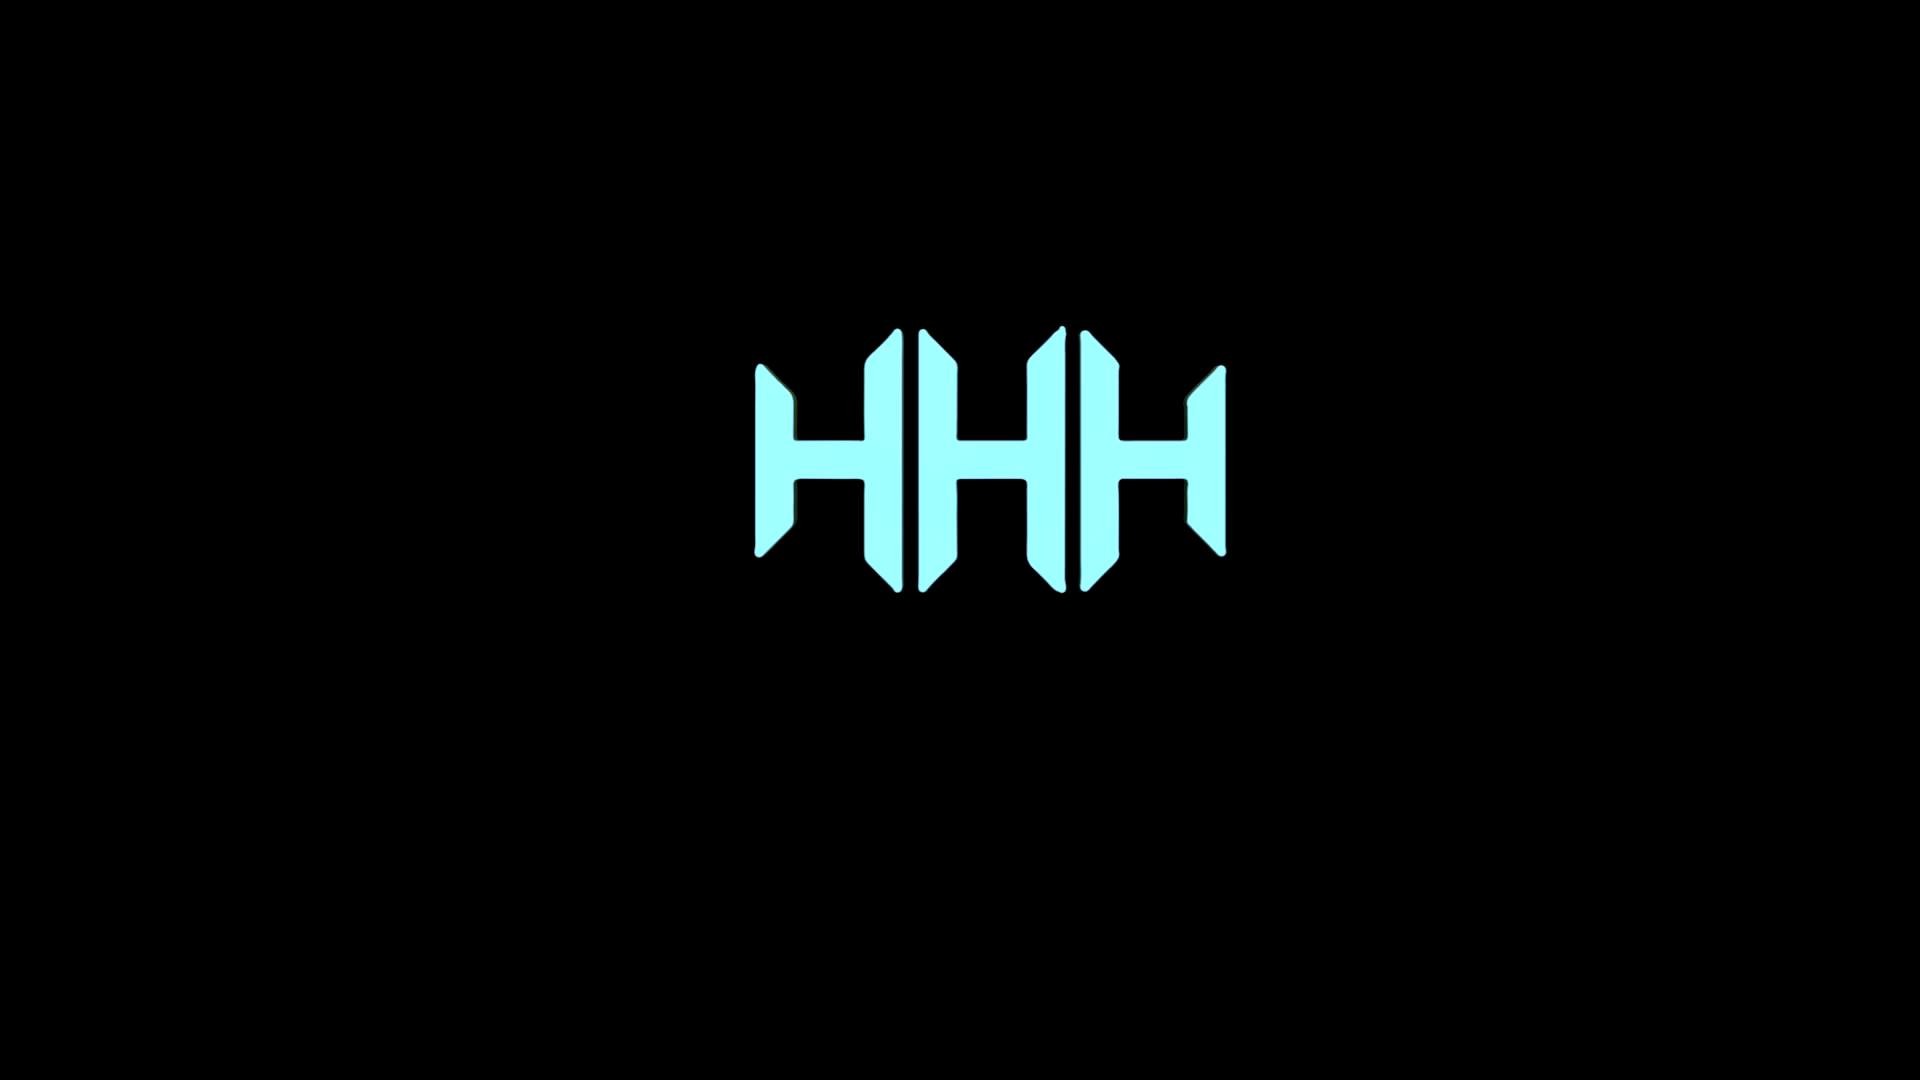 Triple H Logos Wallpaper Image